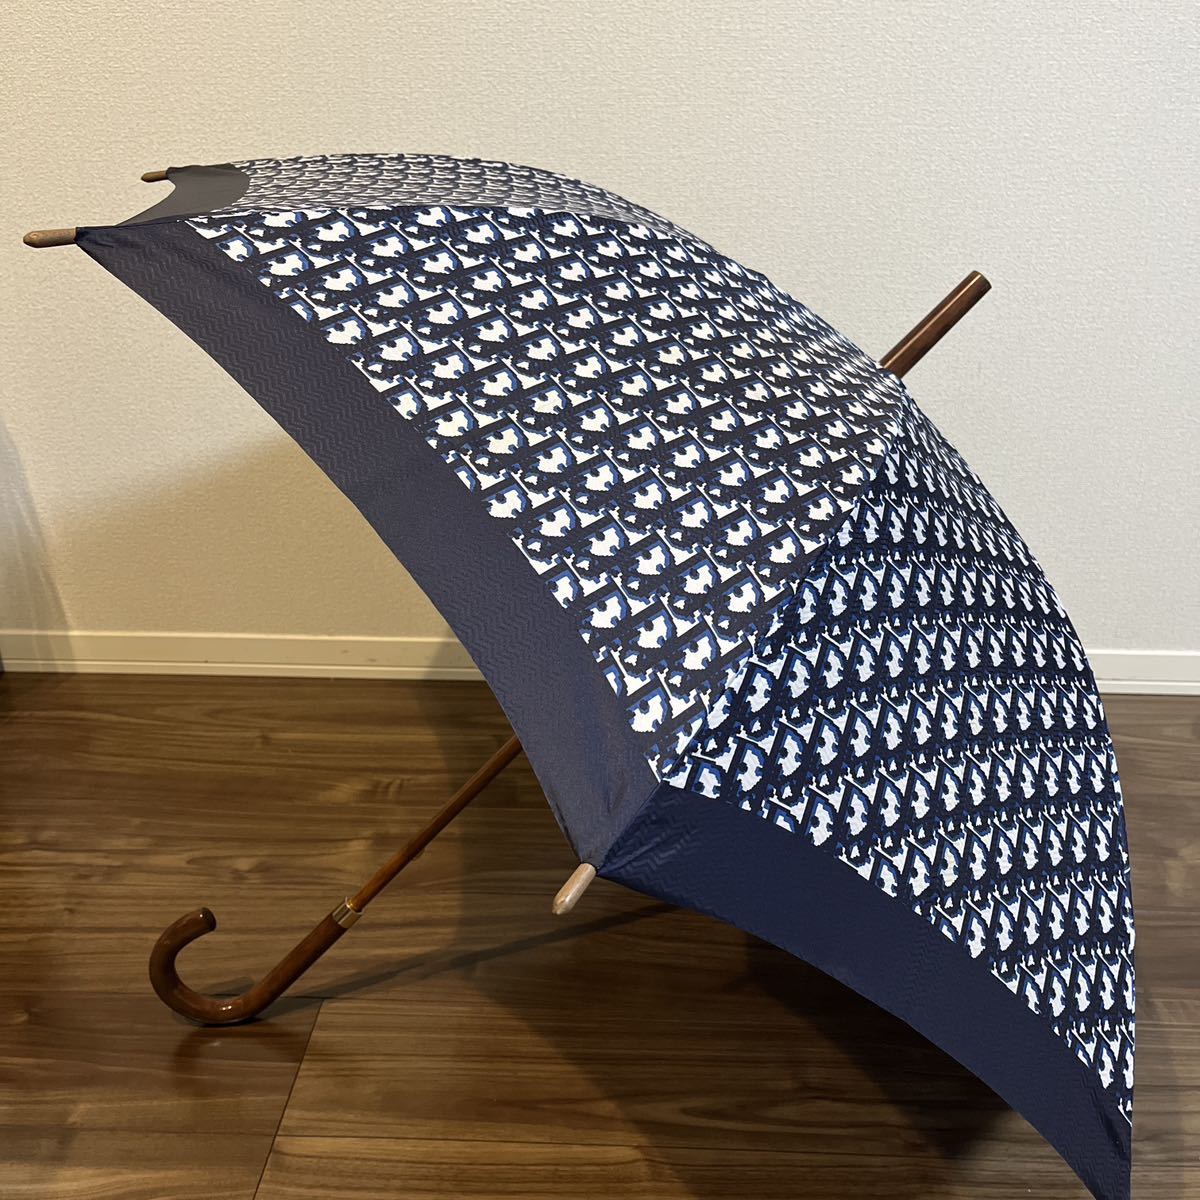  Christian Dior Christian Dior зонт Vintage Dior зонт от дождя общий рисунок длинный зонт Toro ta- рисунок темно-синий белый 1 иен старт 